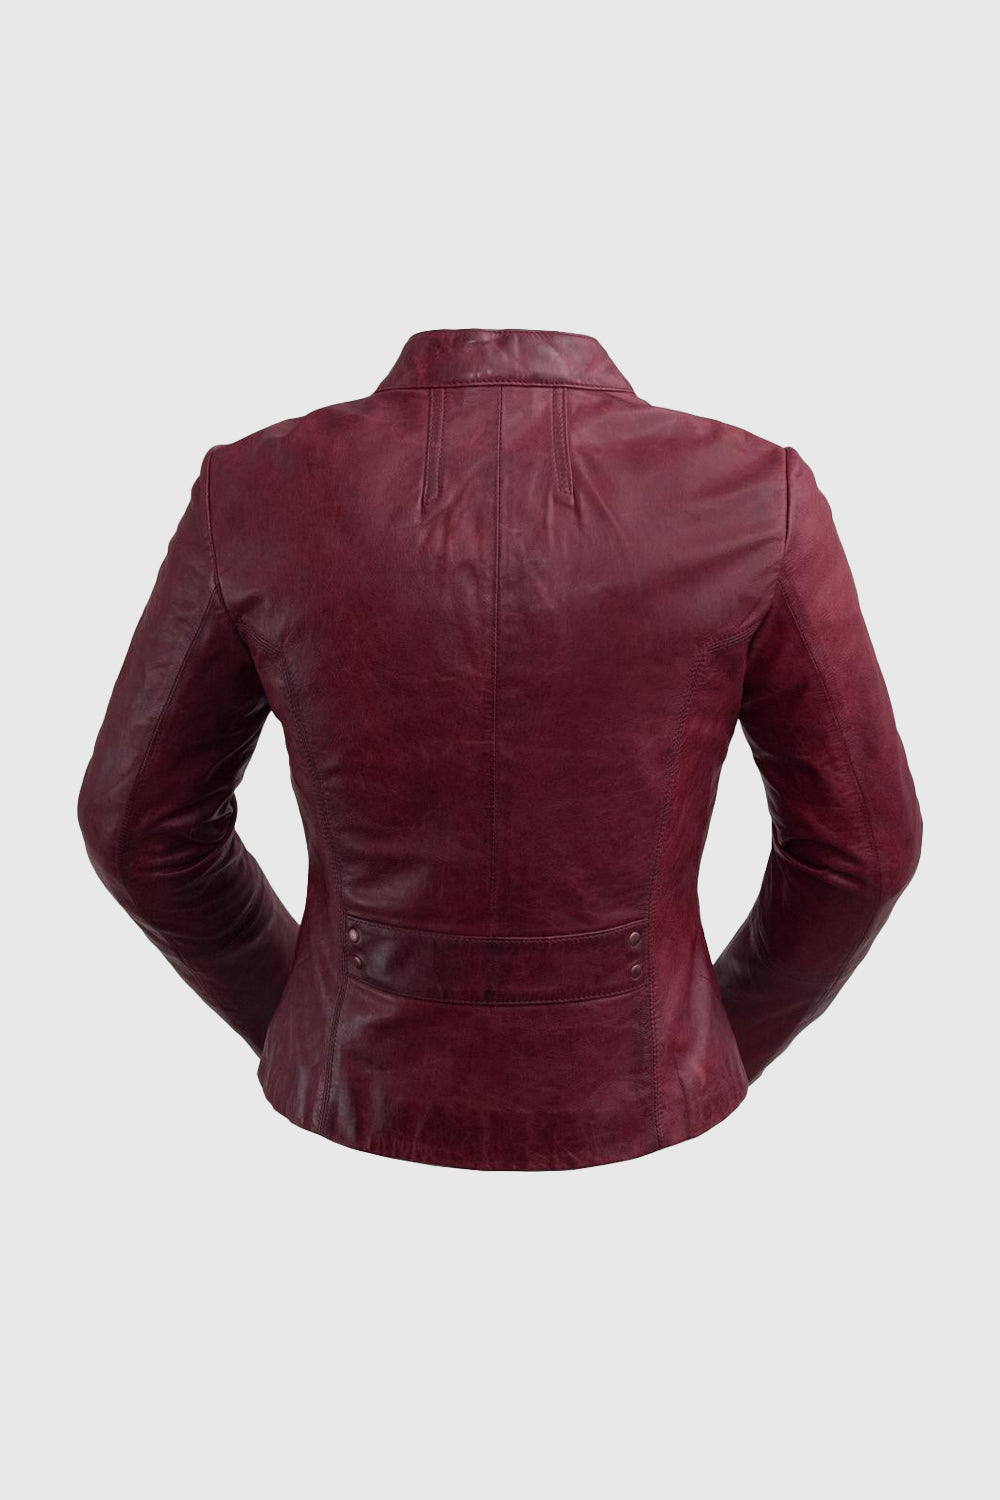 Rexie Womens Fashion Leather Jacket Sangria (POS) Women's Leather Jacket Whet Blu NYC   